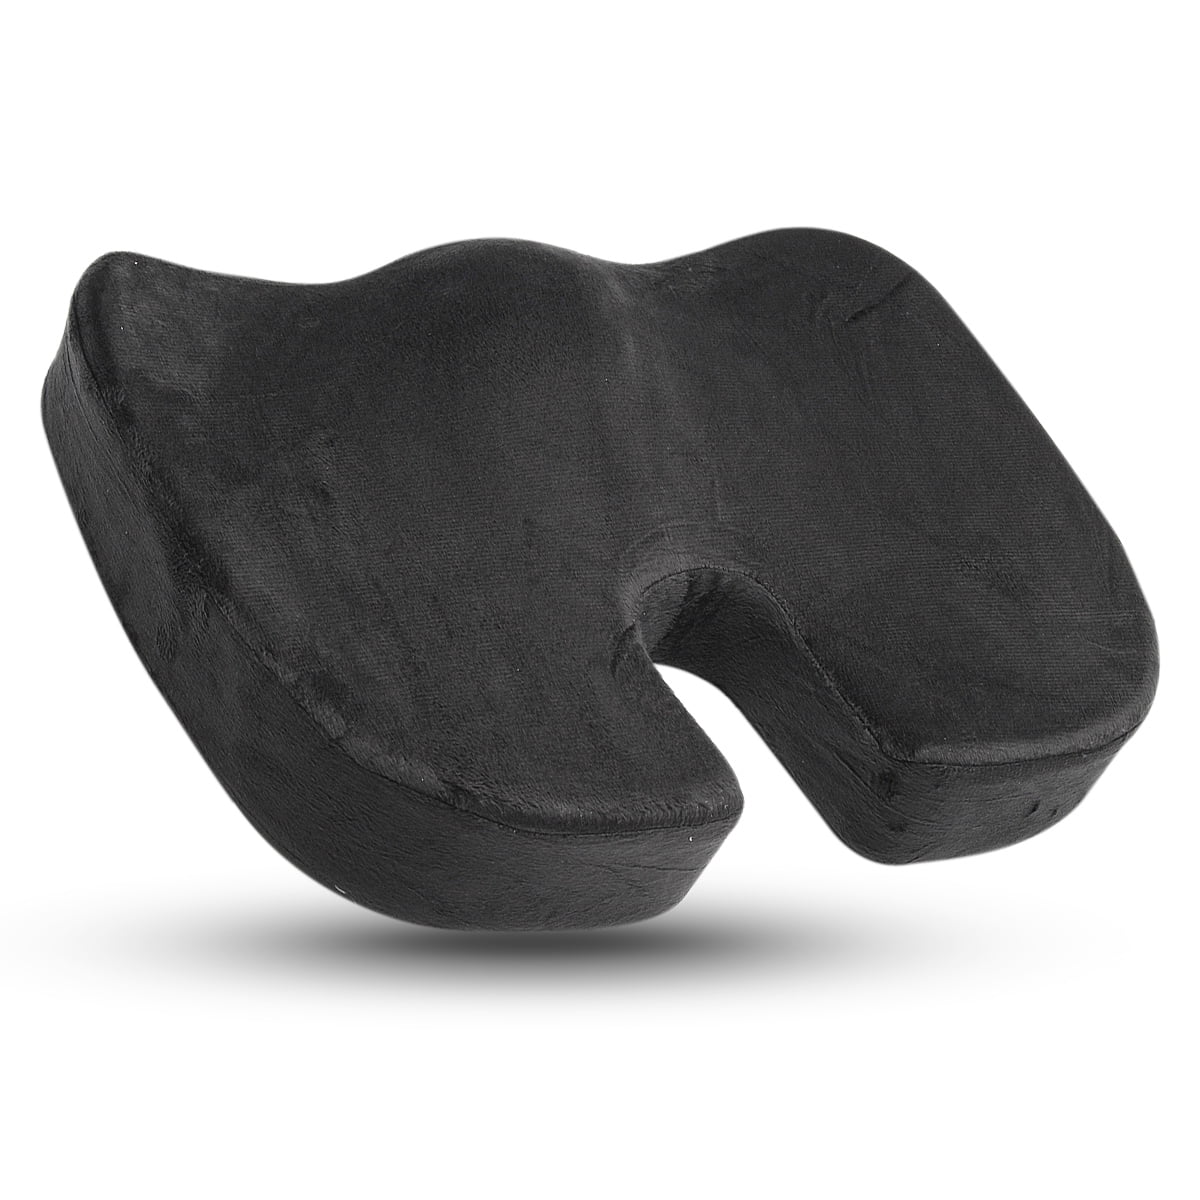 Orthopedic Memory Foam Seat Cushion, with Velour Cover, Ergonomic 